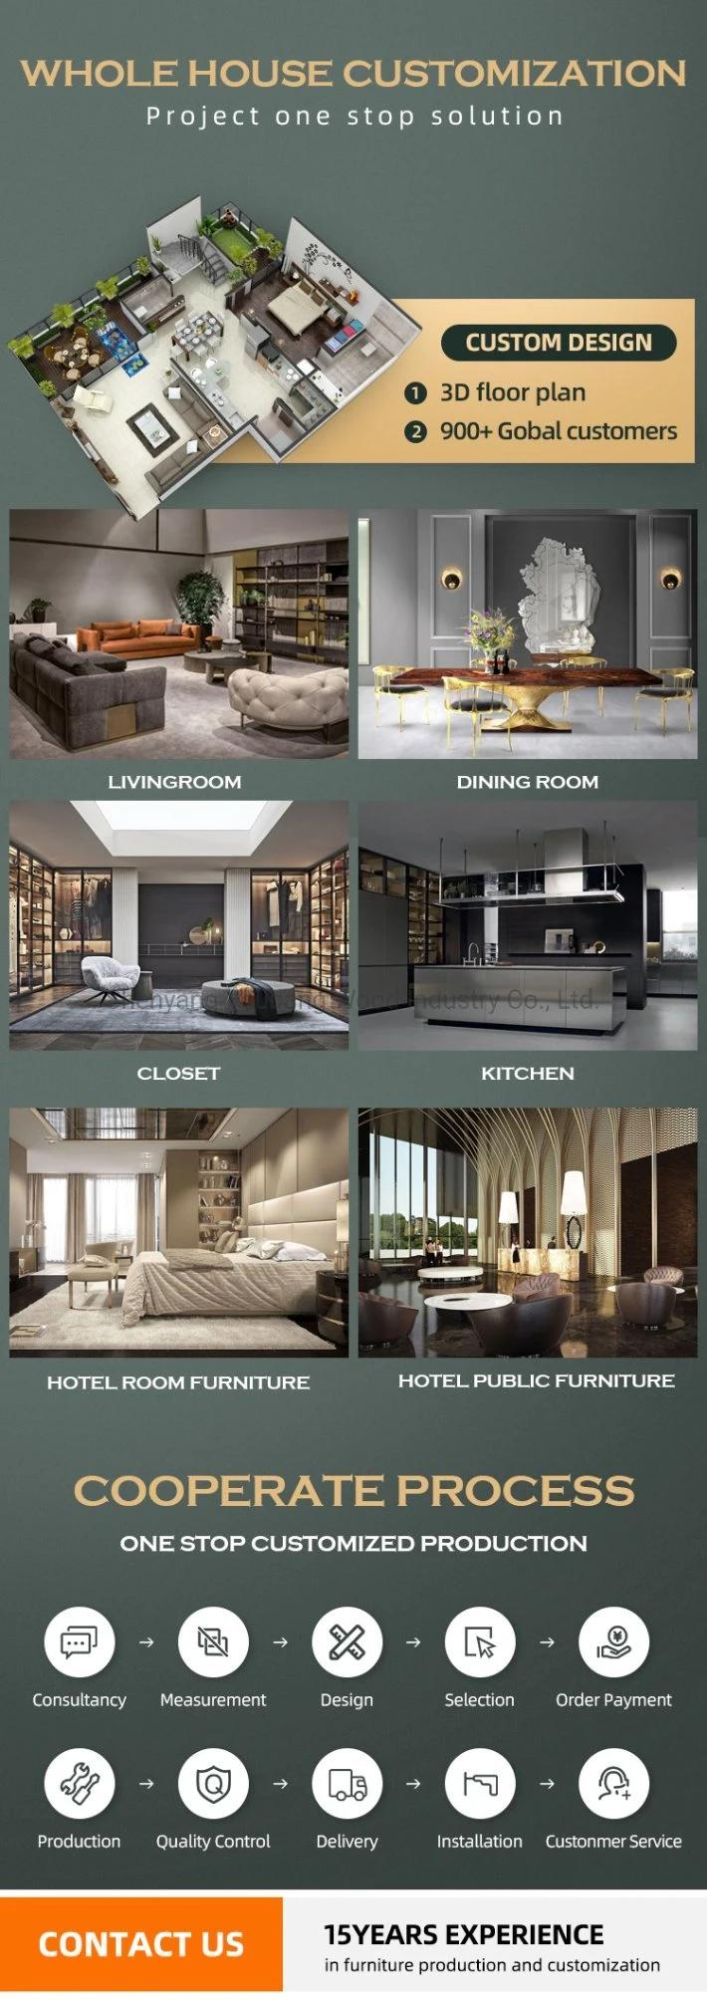 Project 5 Star Hotel Luxury Bedroom Set Modern Furniture Design